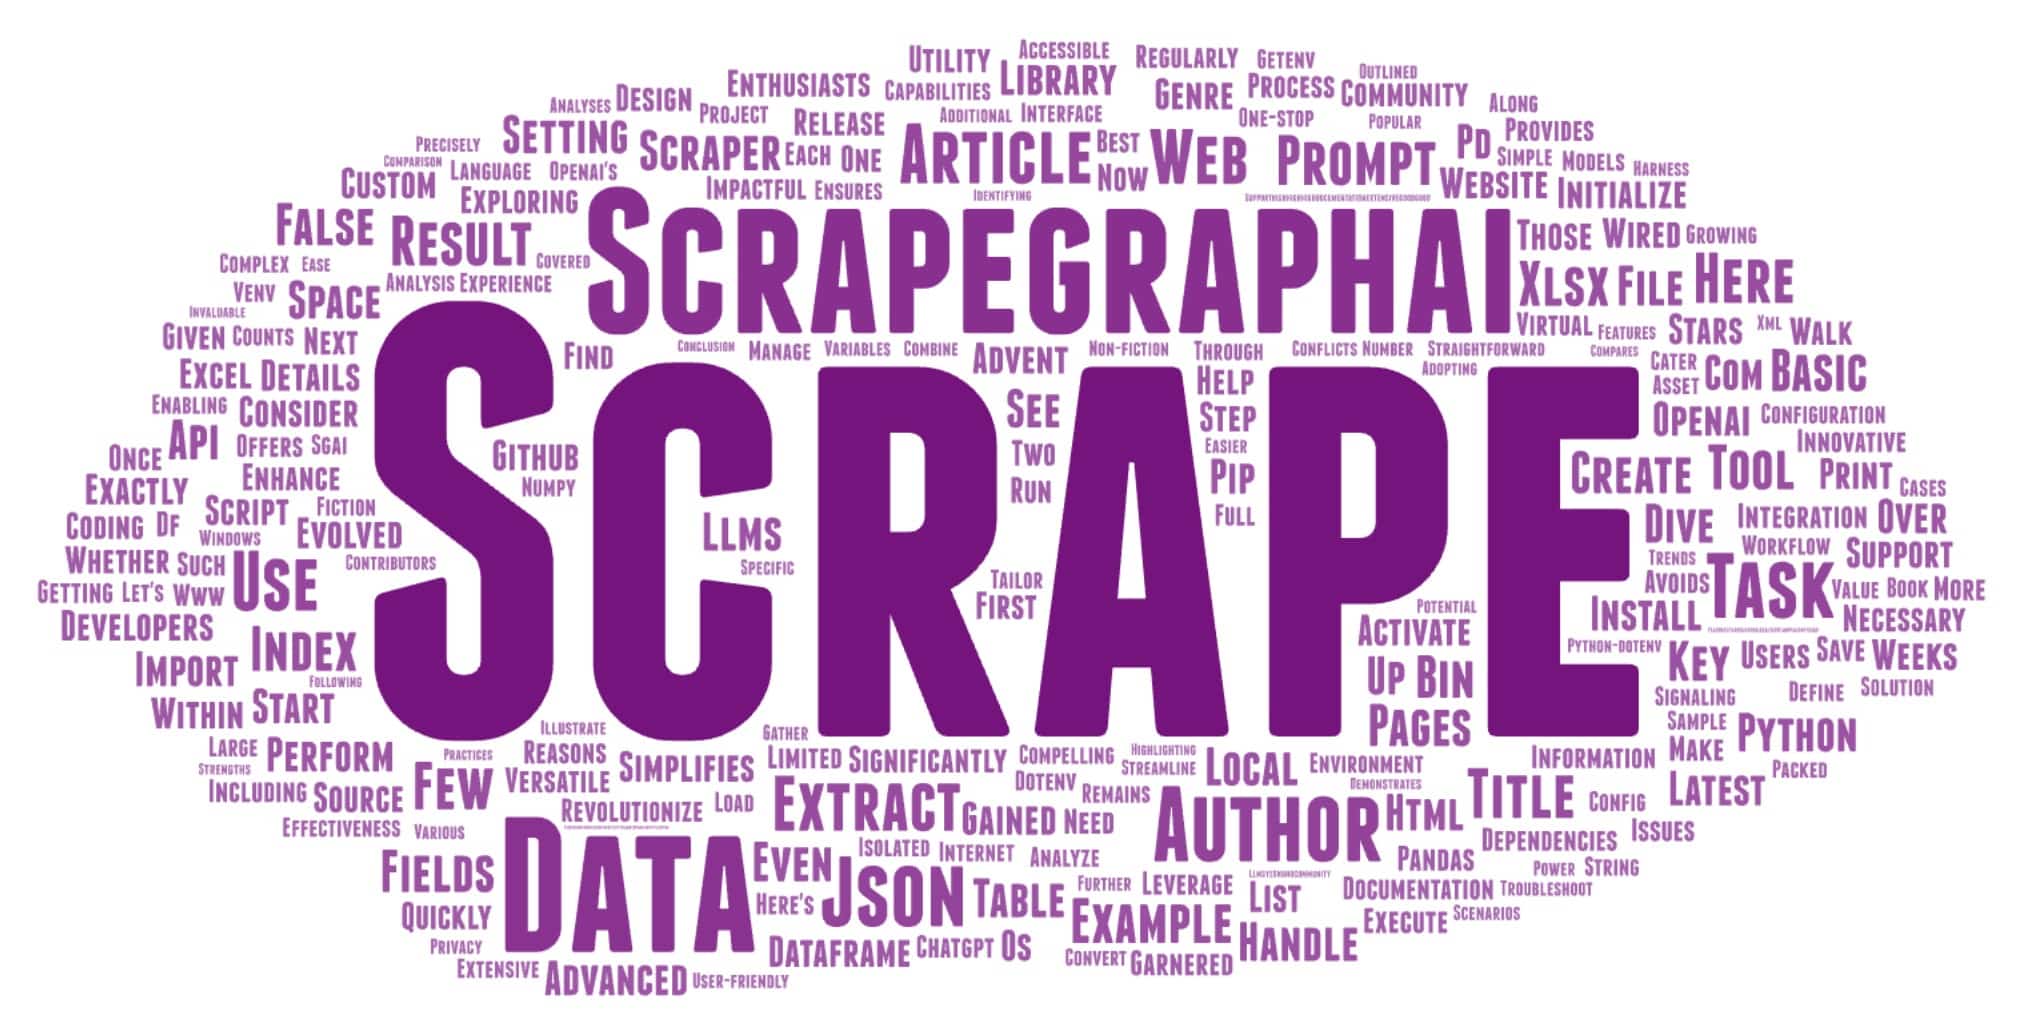 ScrapeGraphAI: Revolutionizing Web Scraping?